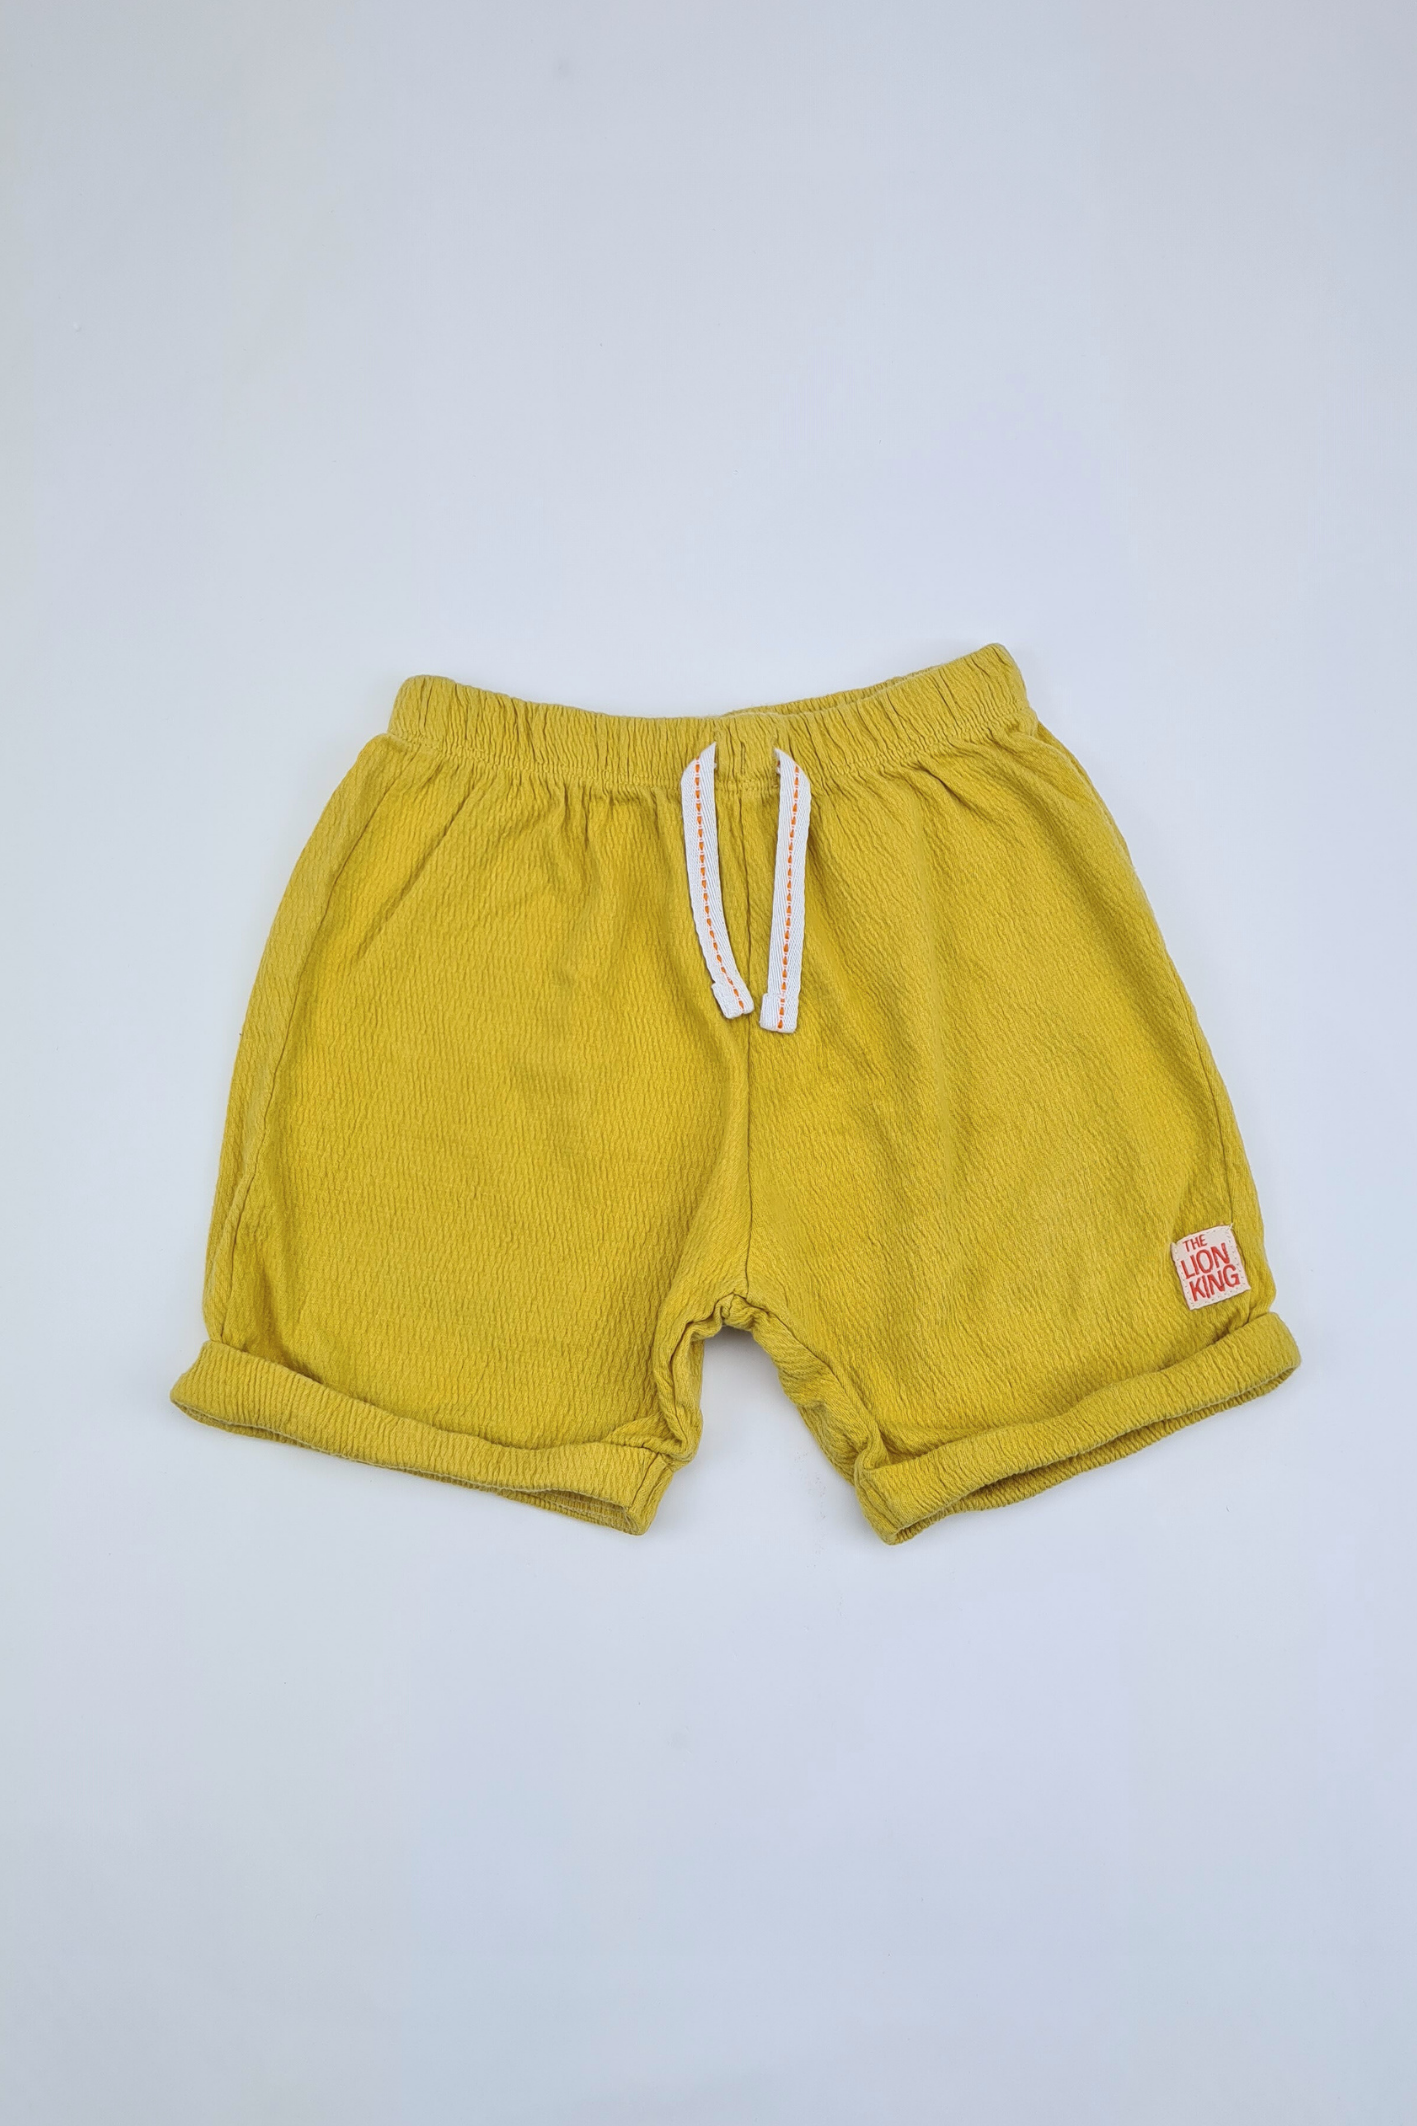 12-18m - Yellow Shorts (Disney Baby)